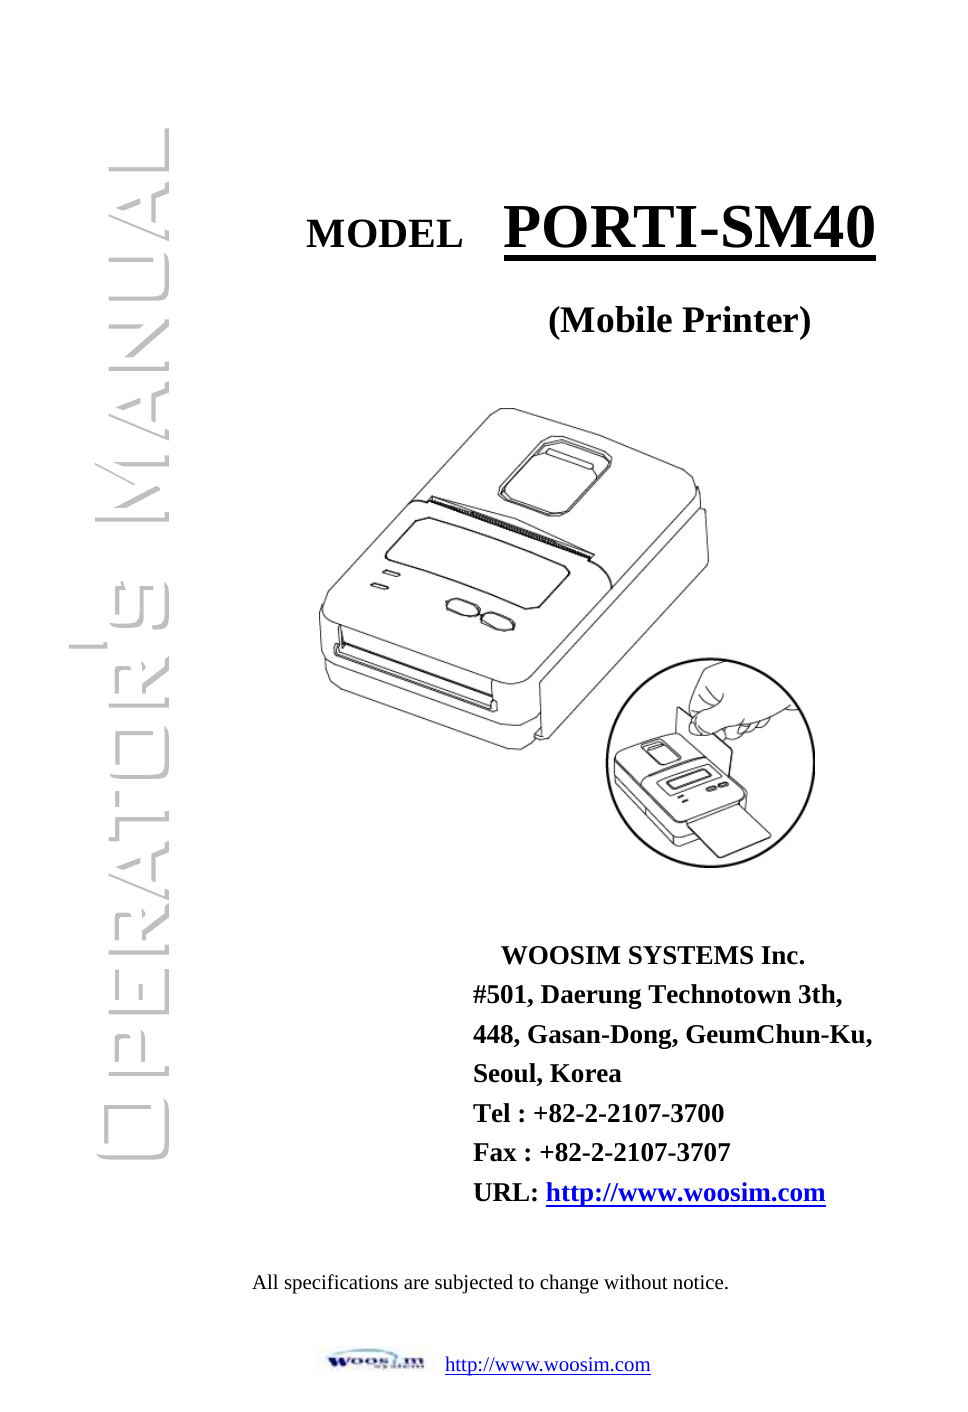 http://www.woosim.com                ͑    MODEL  PORTI-SM40WOOSIM SYSTEMS Inc. #501, Daerung Technotown 3th, 448, Gasan-Dong, GeumChun-Ku,   Seoul, Korea Tel : +82-2-2107-3700 Fax : +82-2-2107-3707 URL: http://www.woosim.com(Mobile Printer)All specifications are subjected to change without notice.